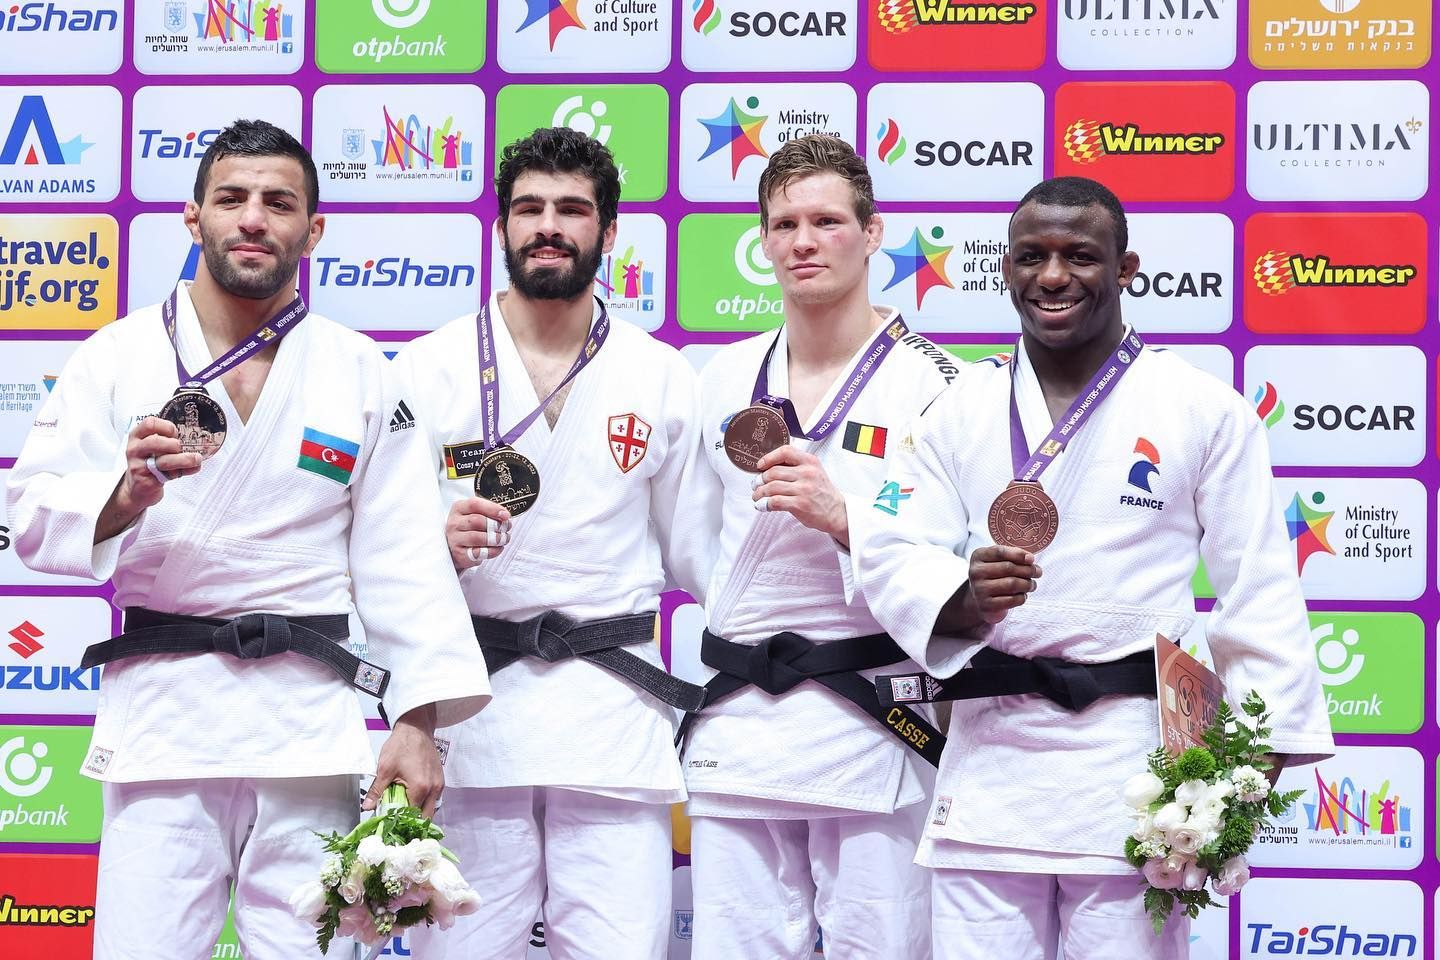 Azerbaijani judokas claims medals in Israel [PHOTO]